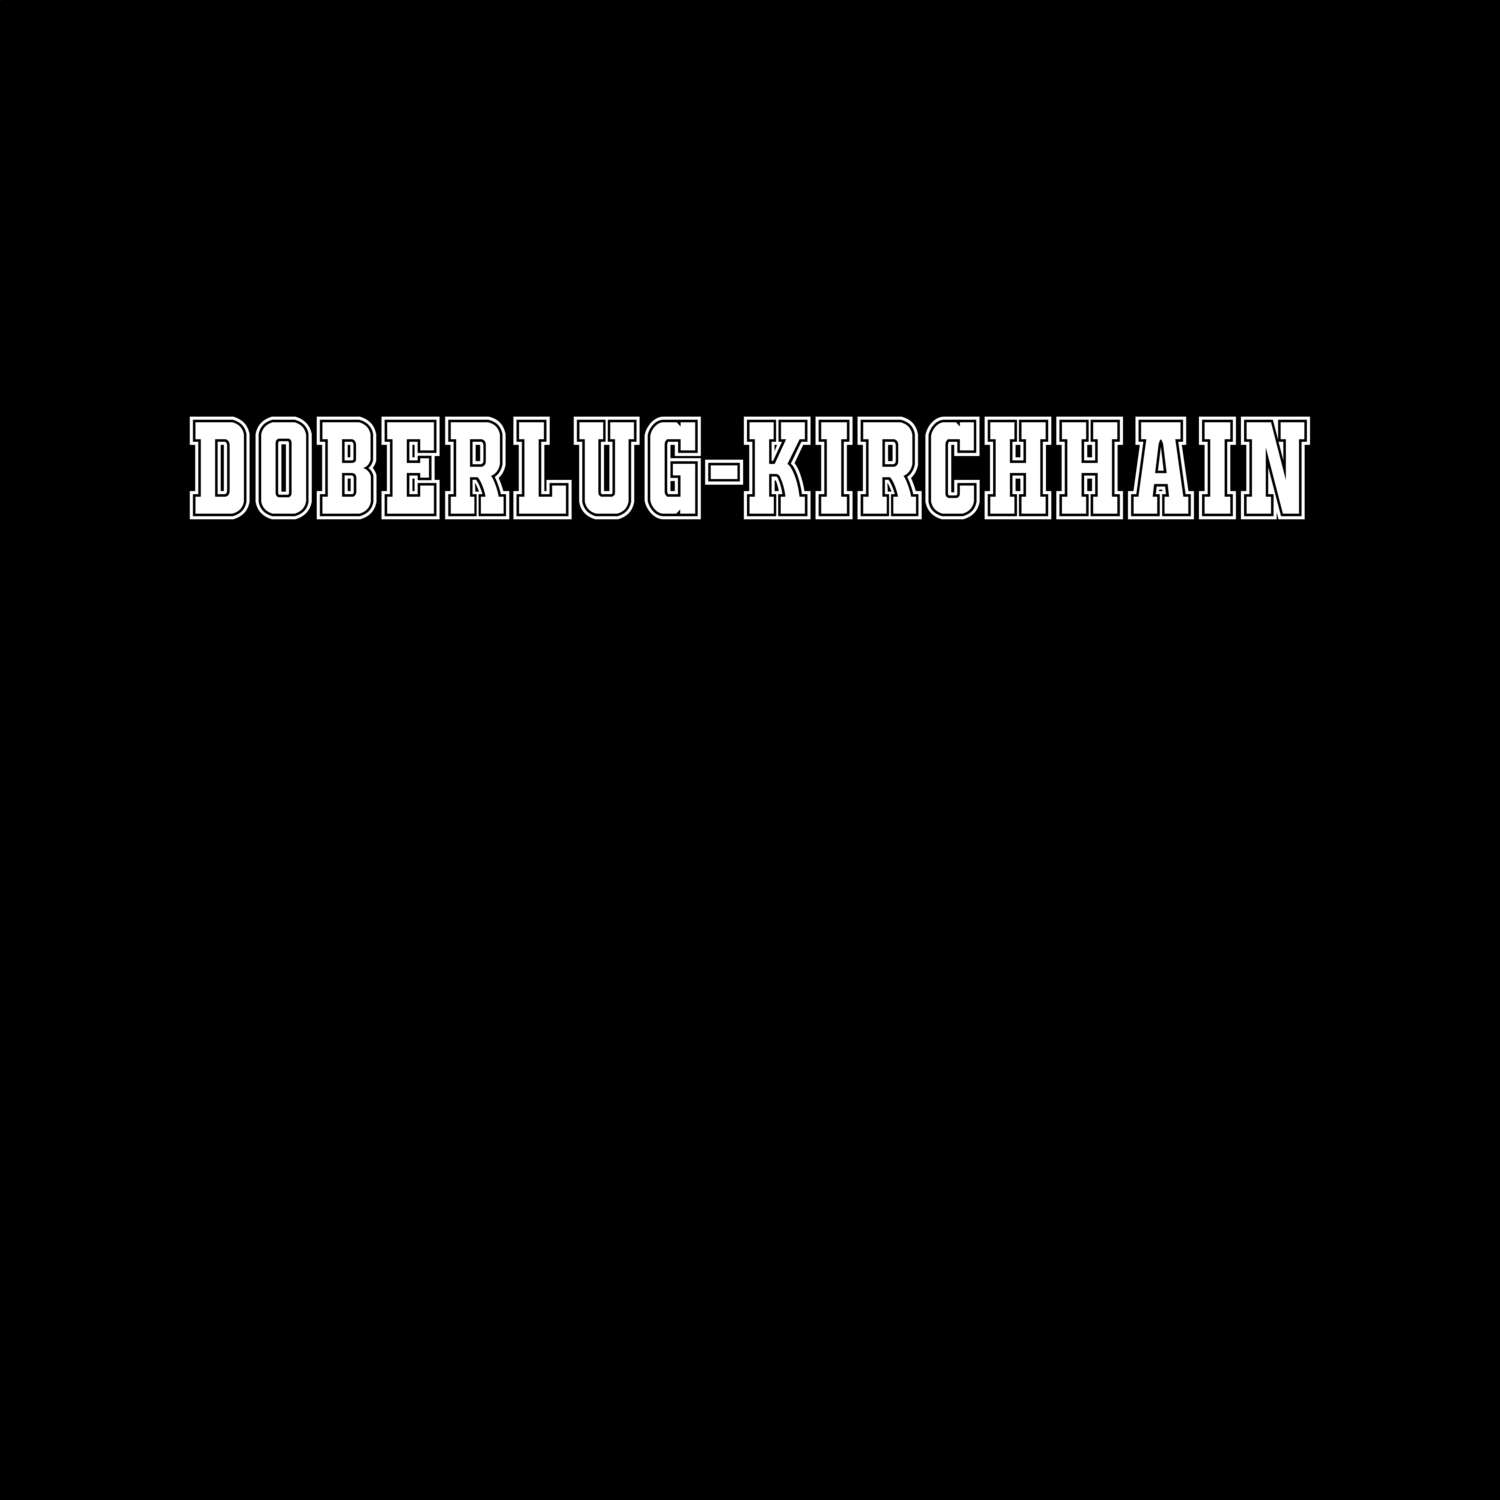 Doberlug-Kirchhain T-Shirt »Classic«